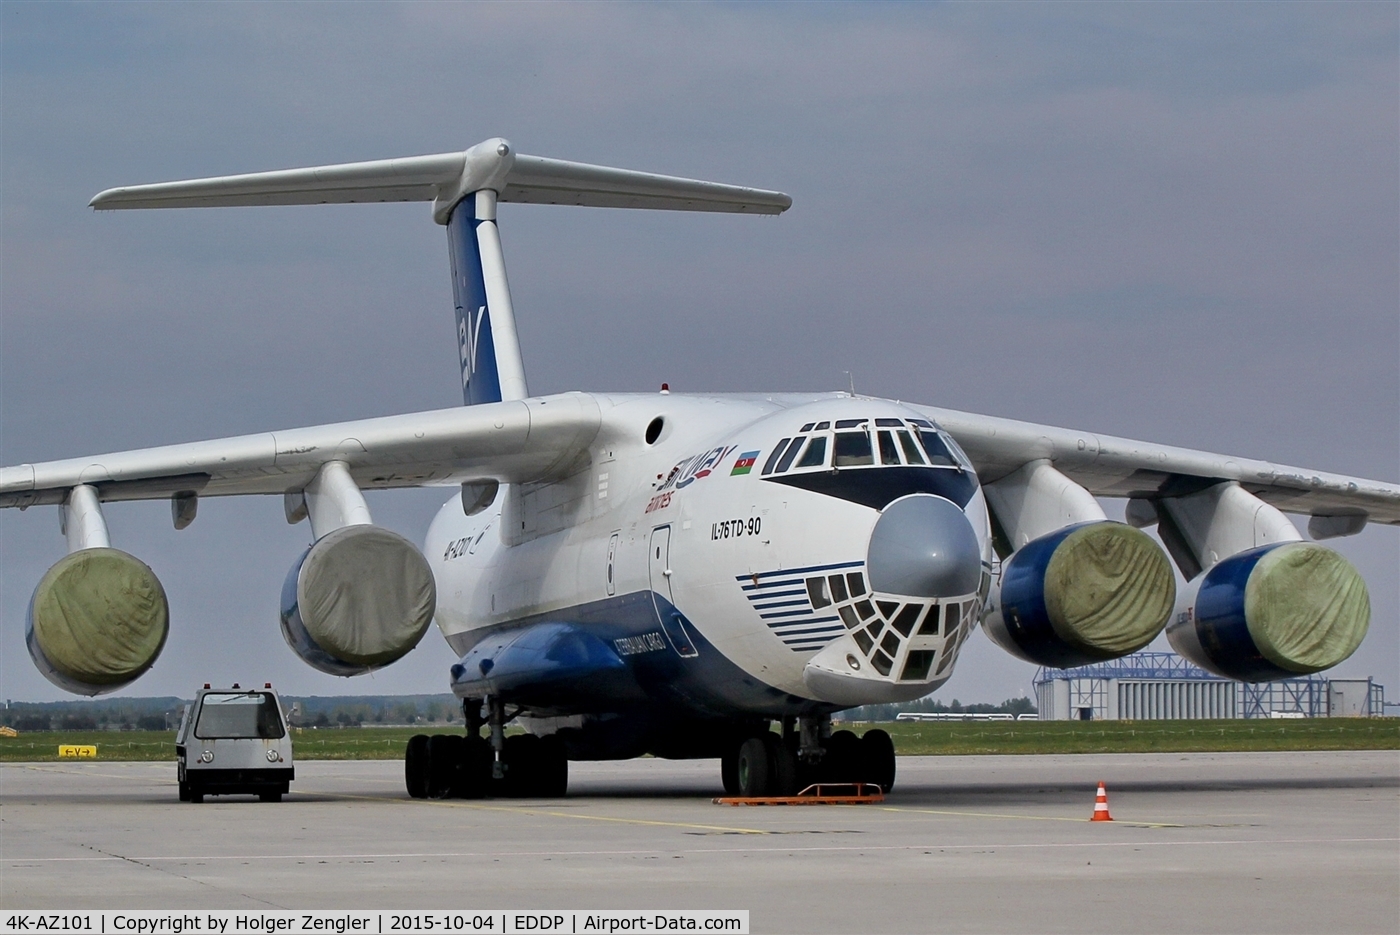 4K-AZ101, 1997 Ilyushin Il-76TD-90VD C/N 1063420716, Waiting for a new task on apon 2....